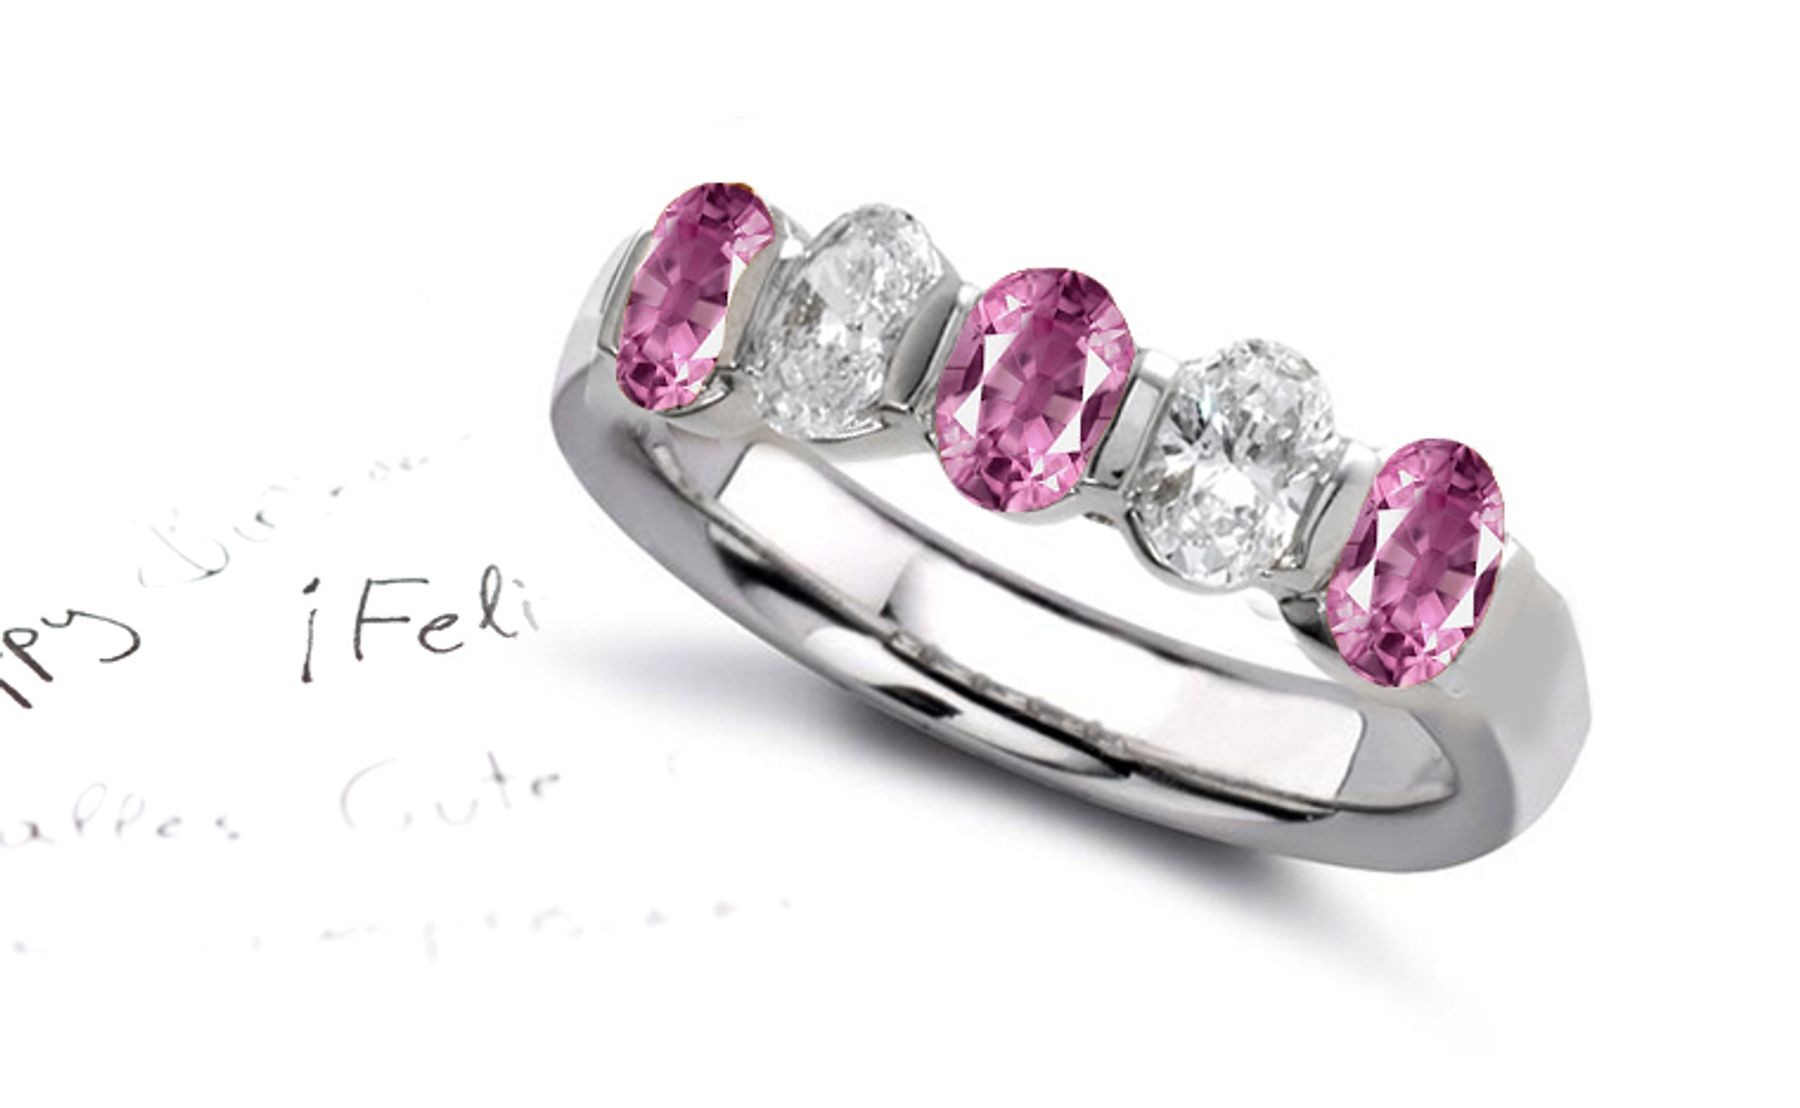 The Promise of Love: Women's Pink Beautiful Diamond & Sapphire Ring